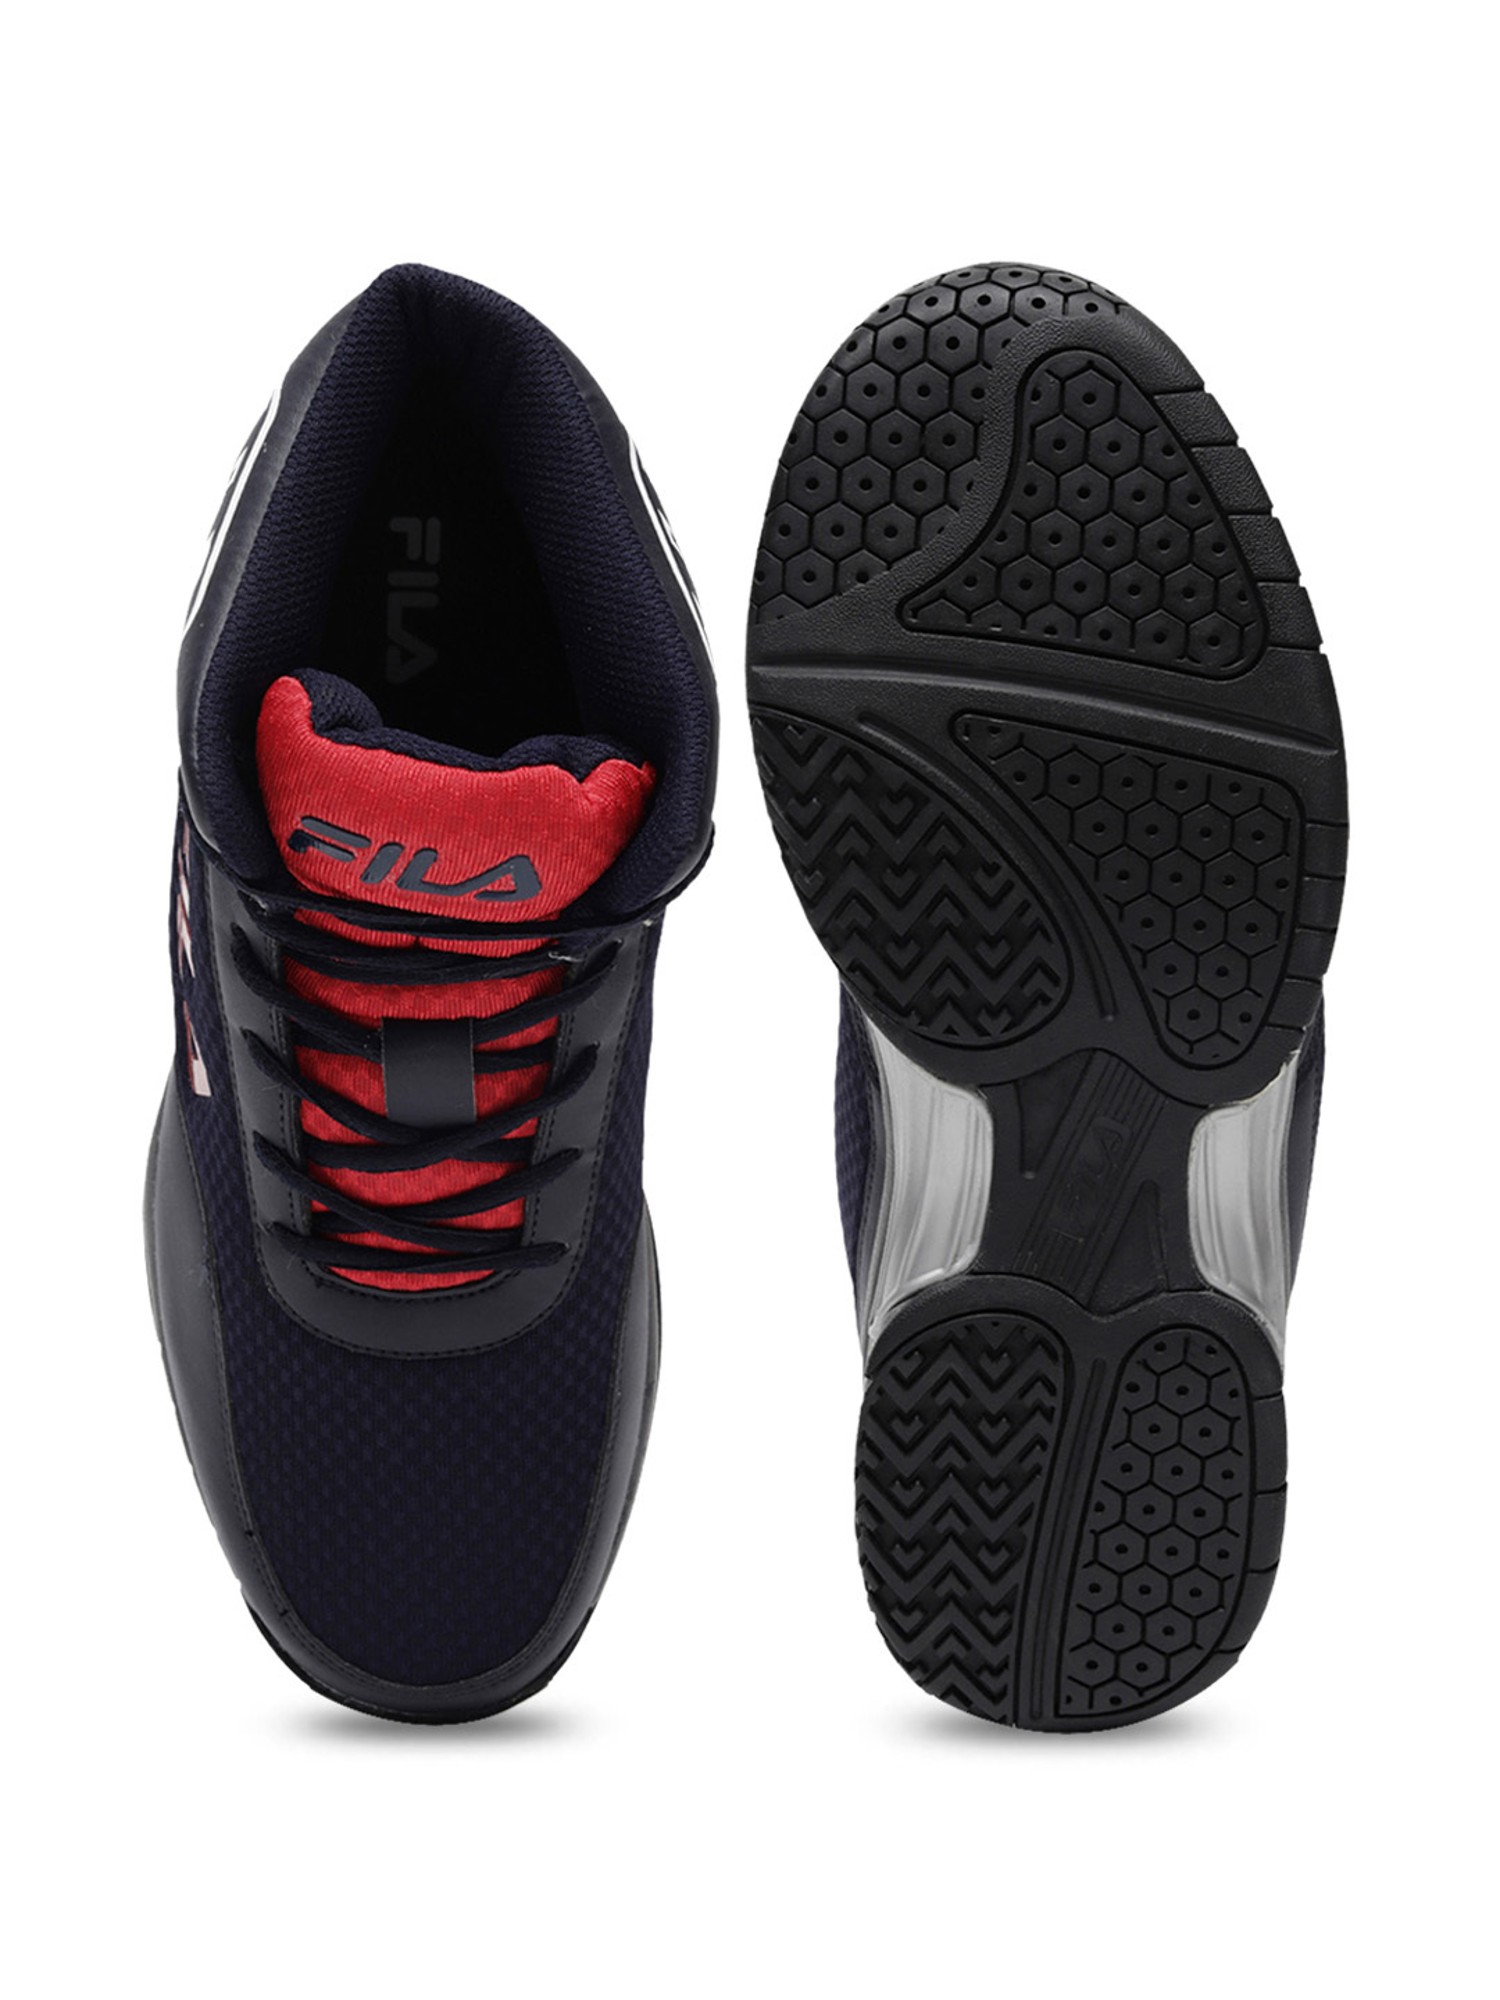 Fila Cool Max Women's Size 9.5 Black/Teal Running Shoes DLS Foam  893686 | eBay